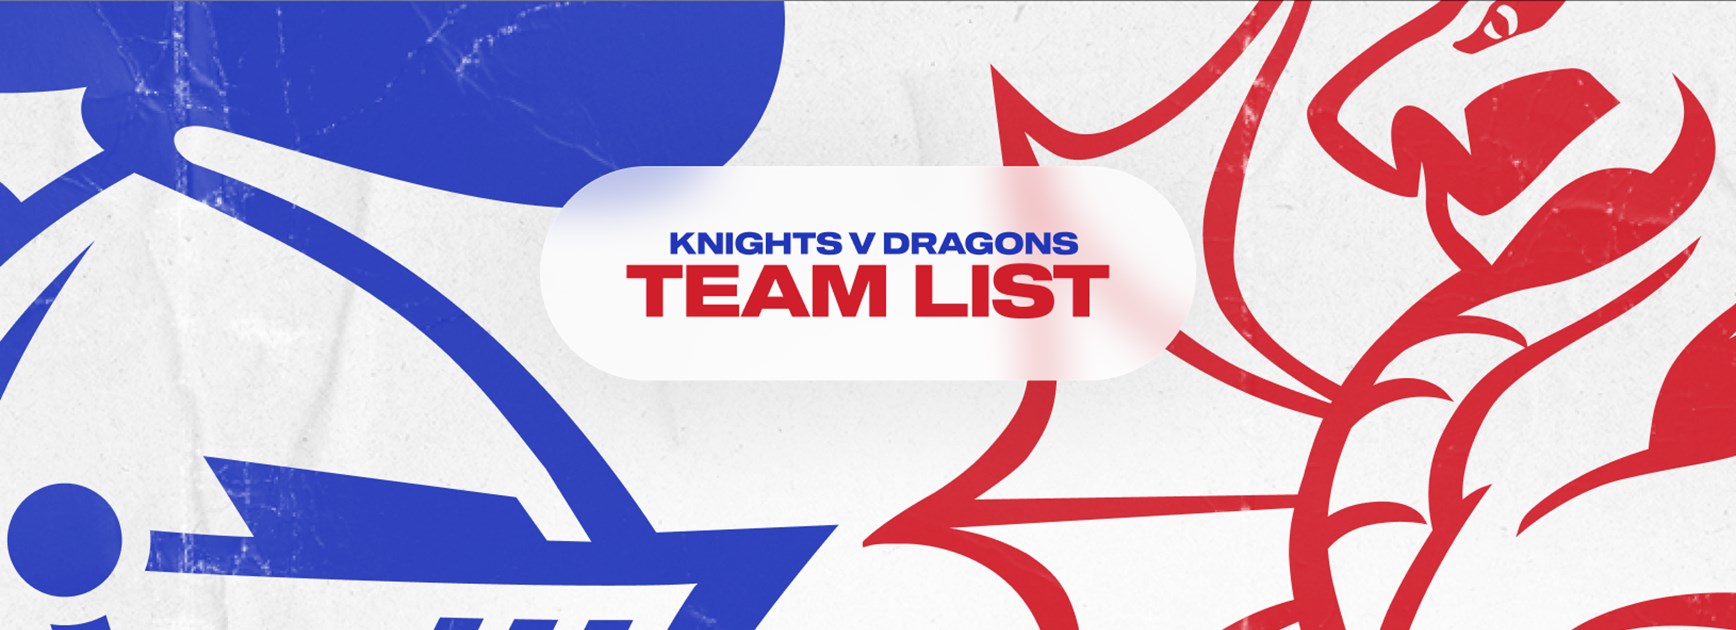 Knights v Dragons Round 5 NRL team list